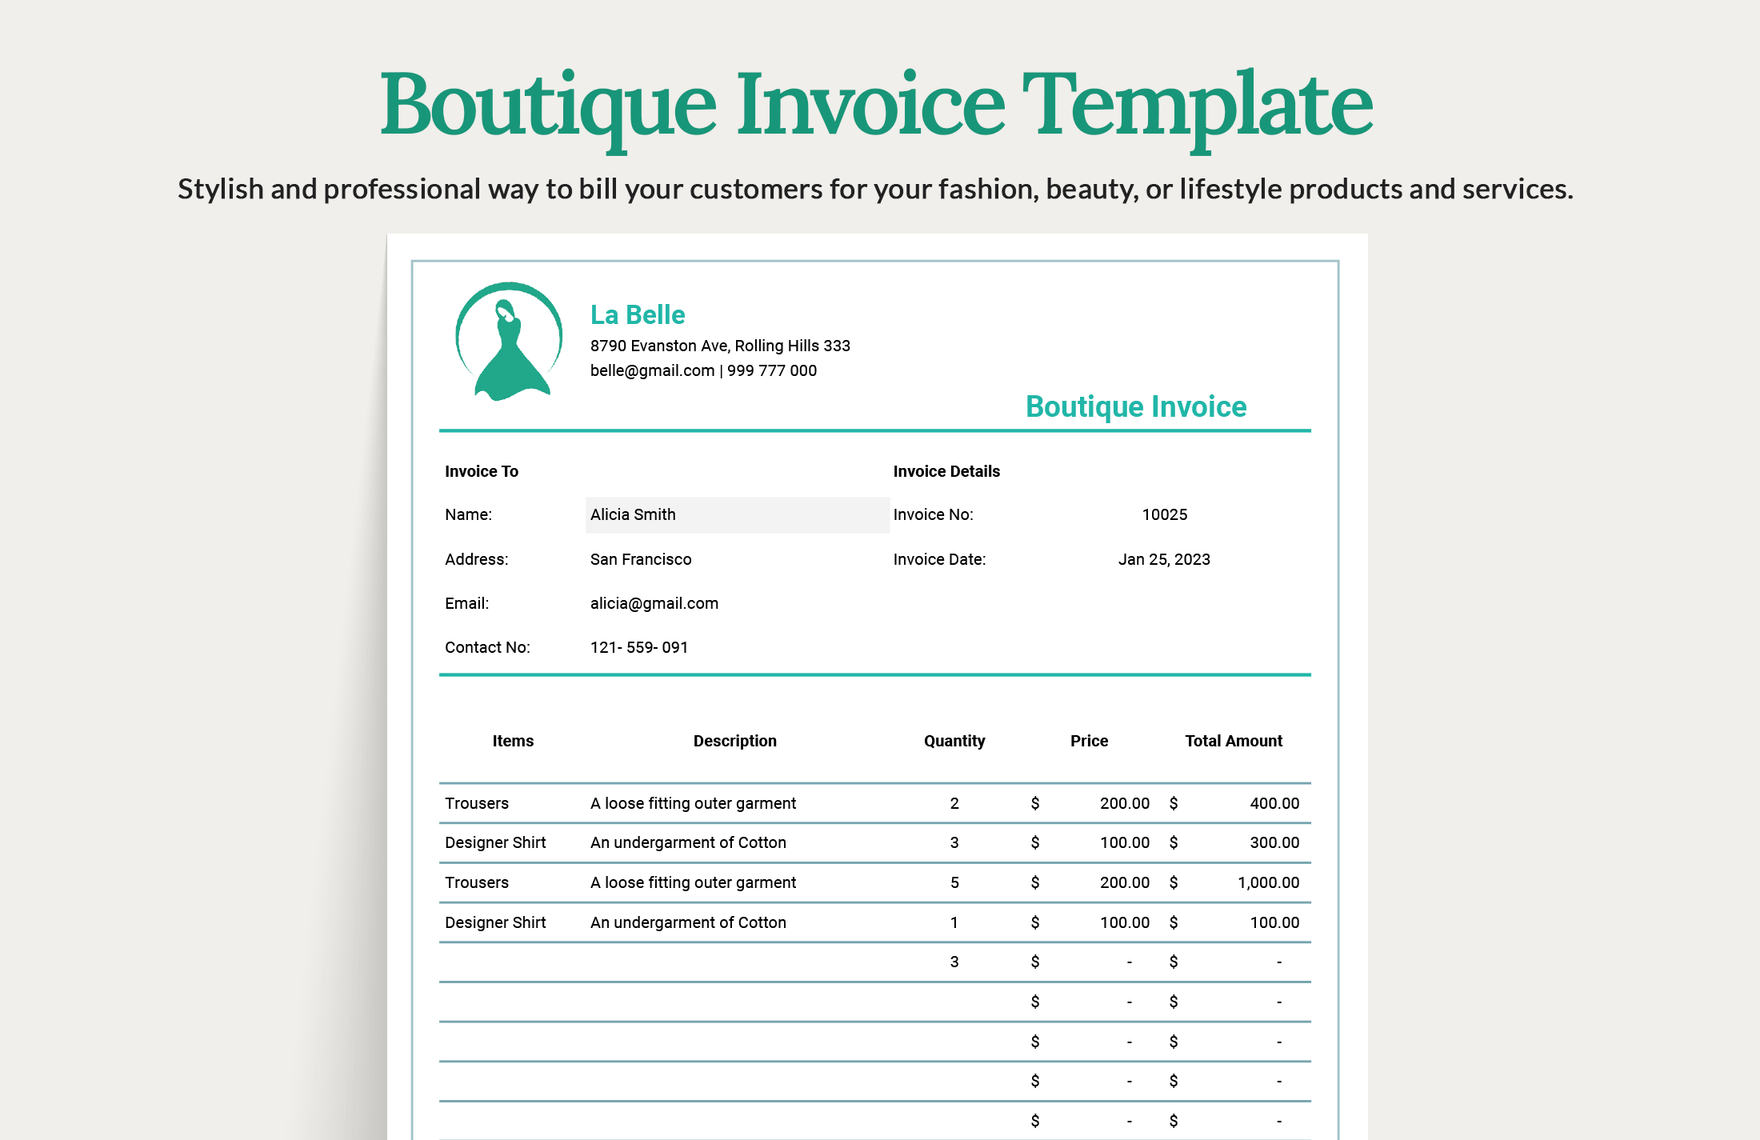 Boutique Invoice Template